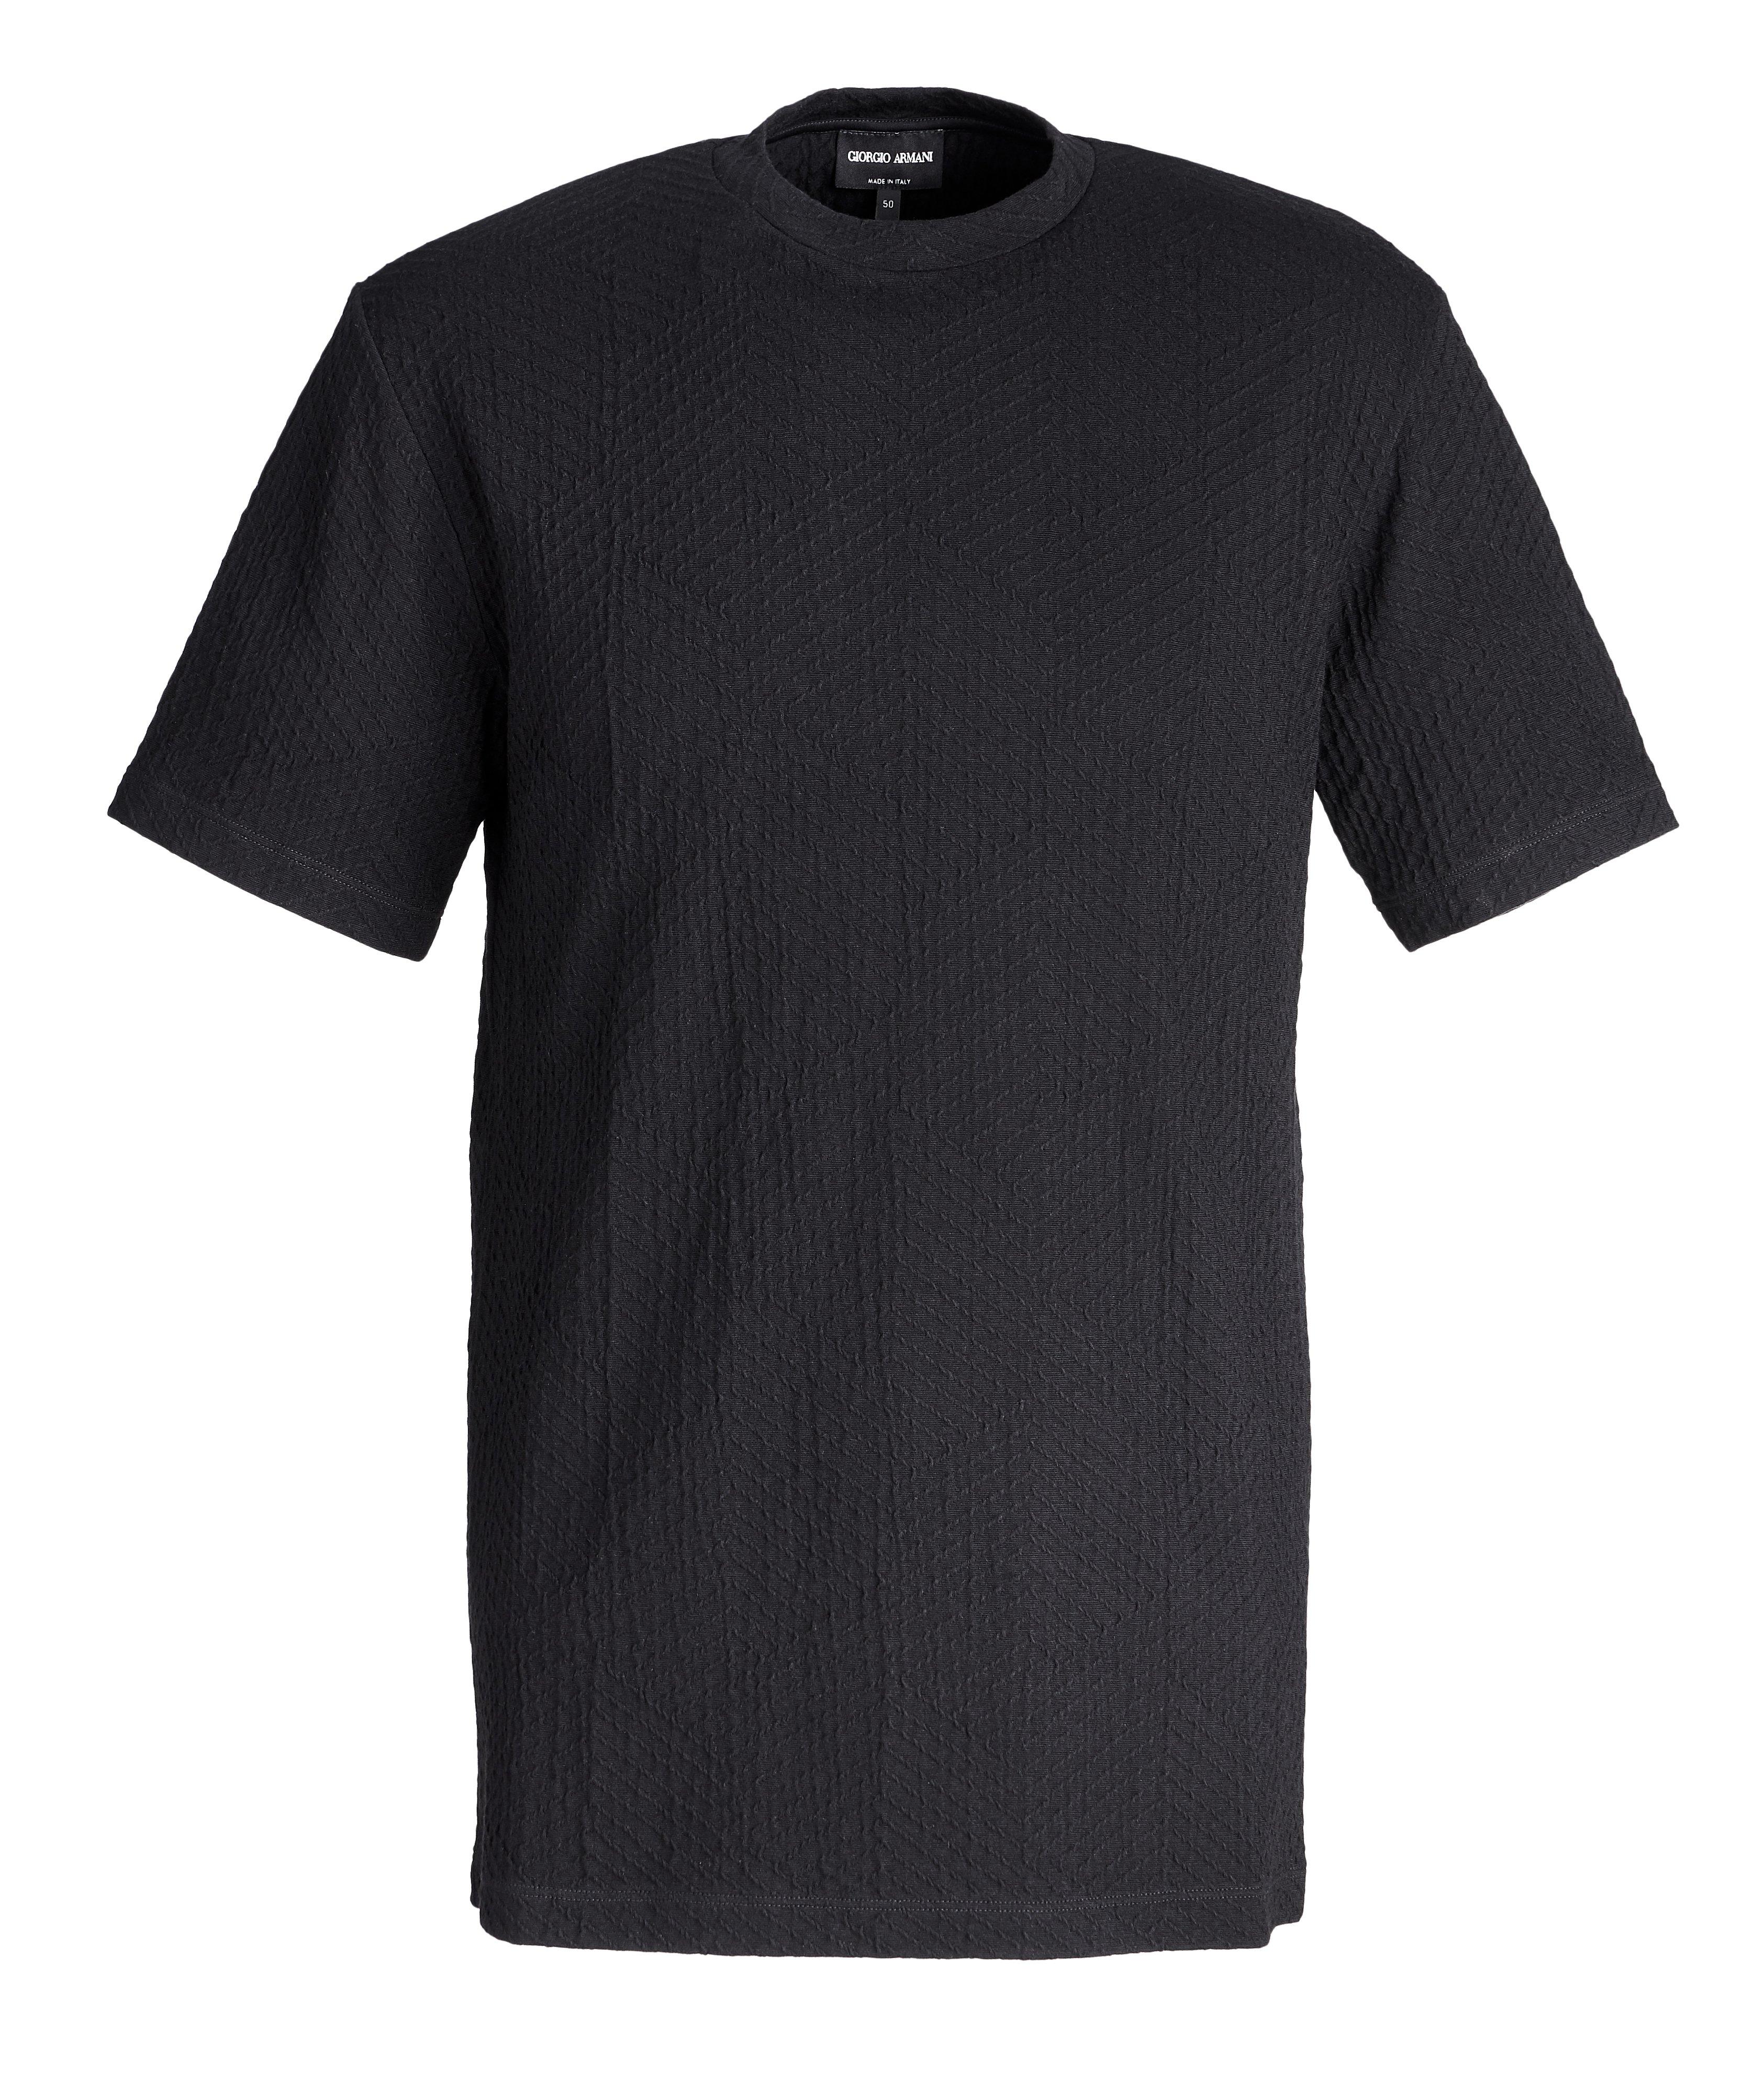 Chevron Textured T-Shirt image 0